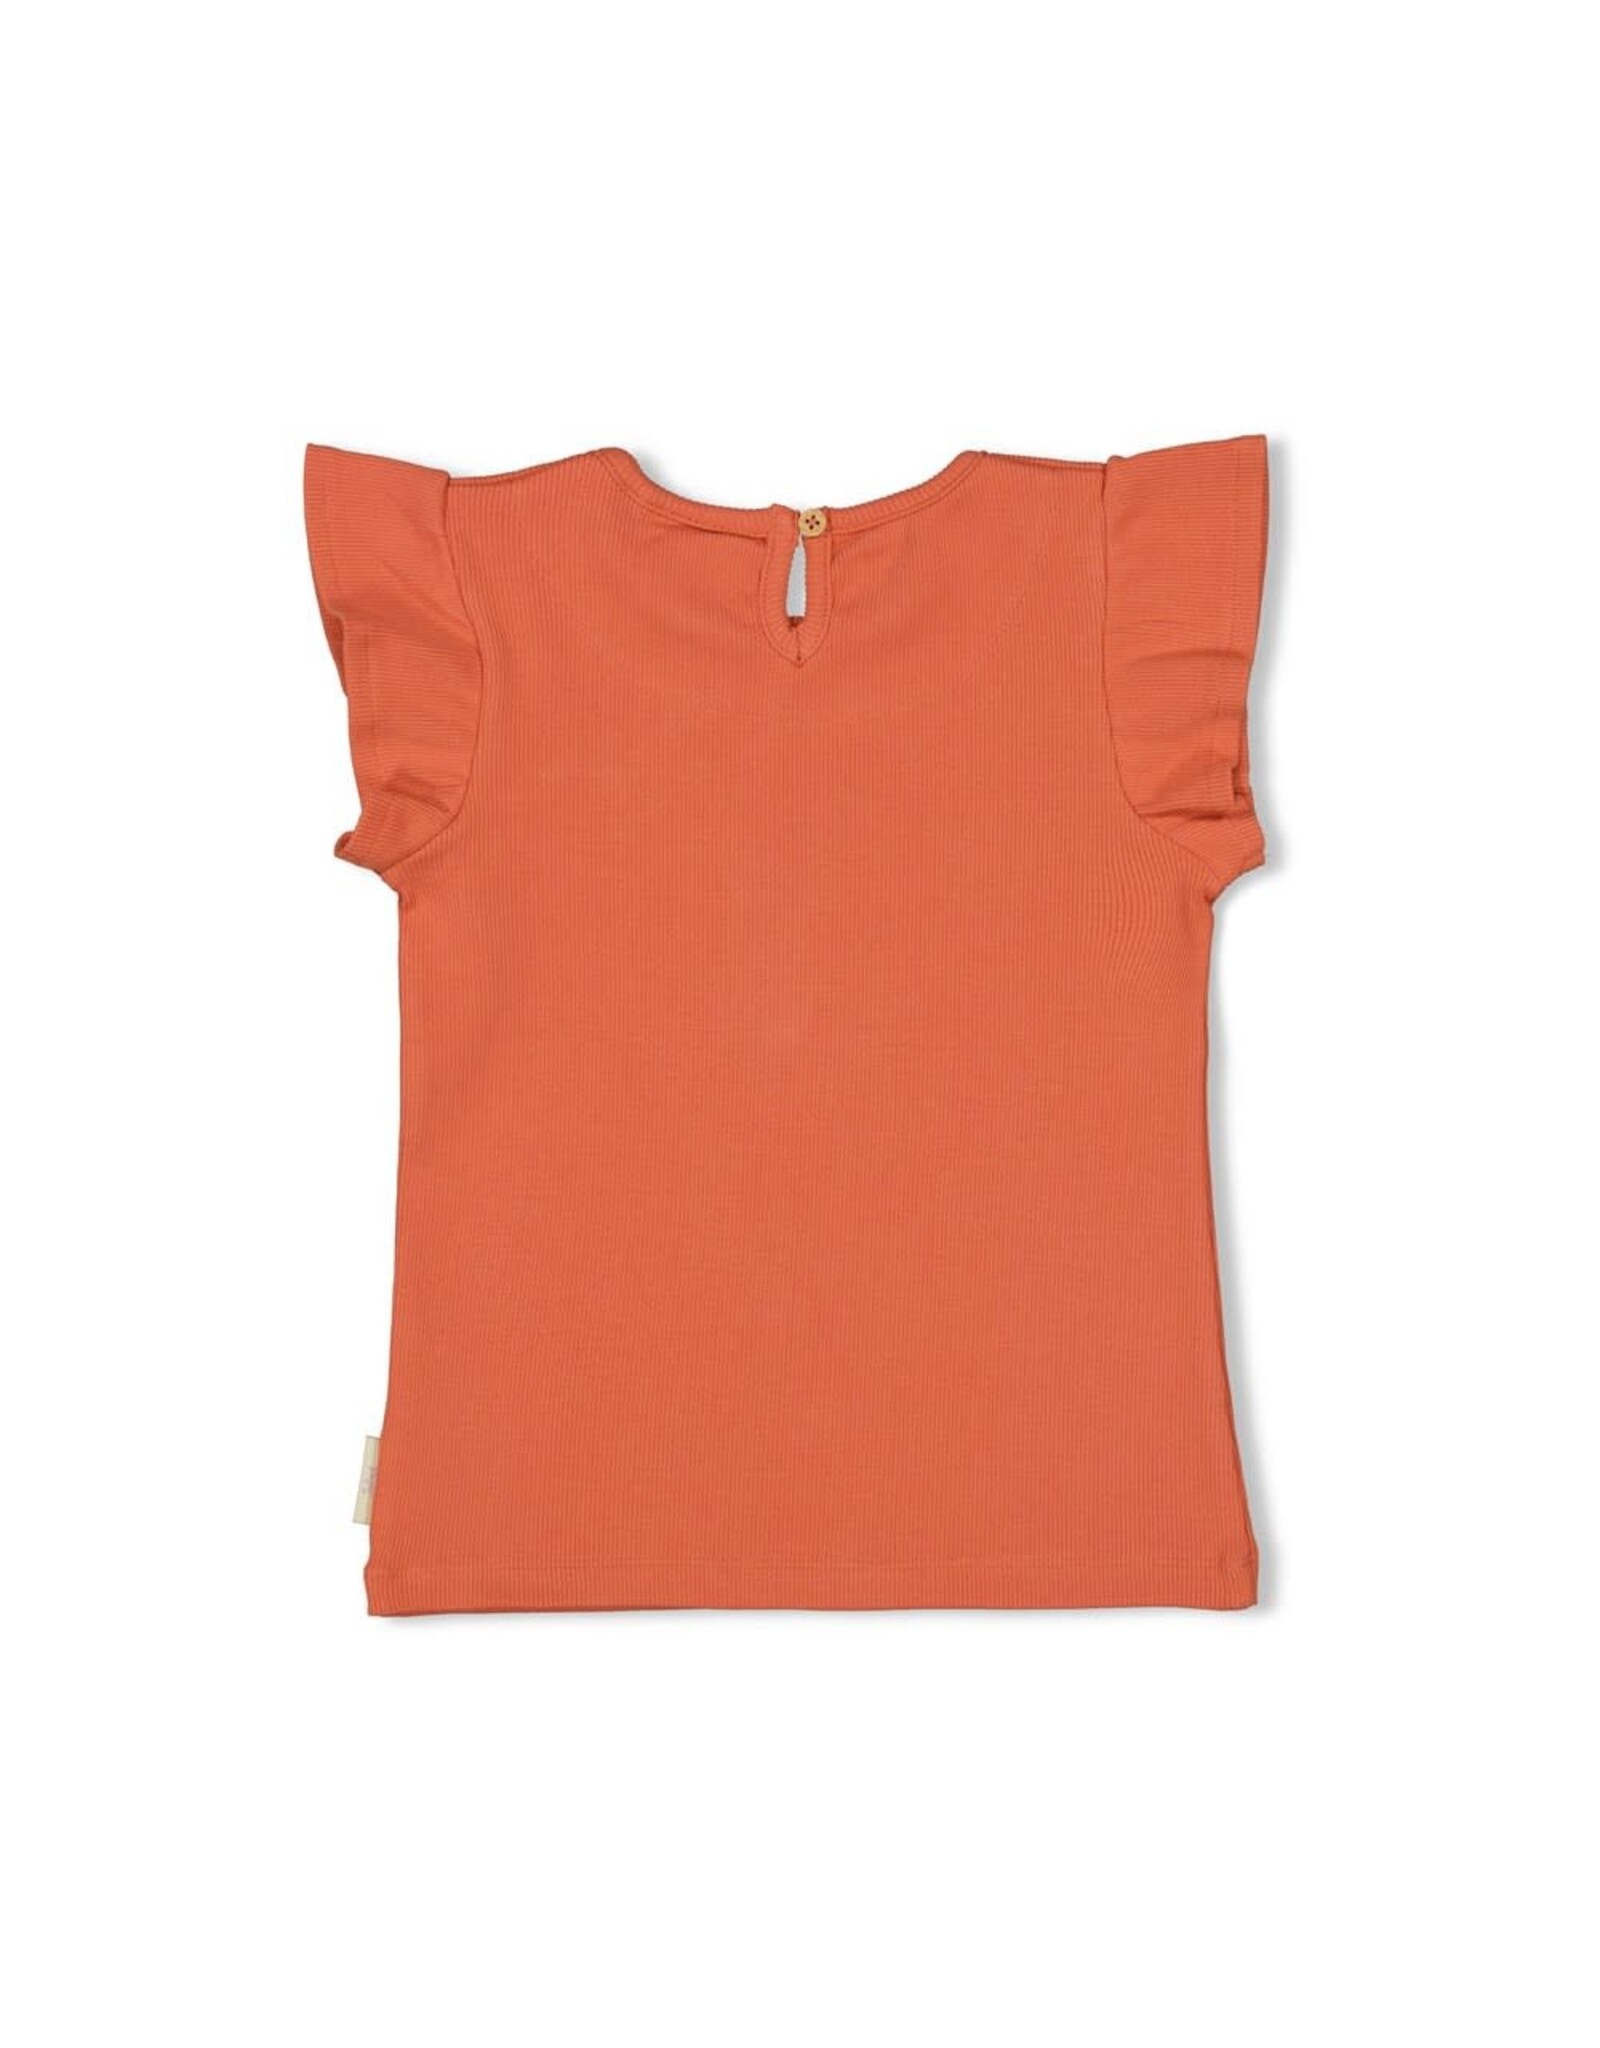 Jubel T-shirt - Sunny Side Up Terracotta